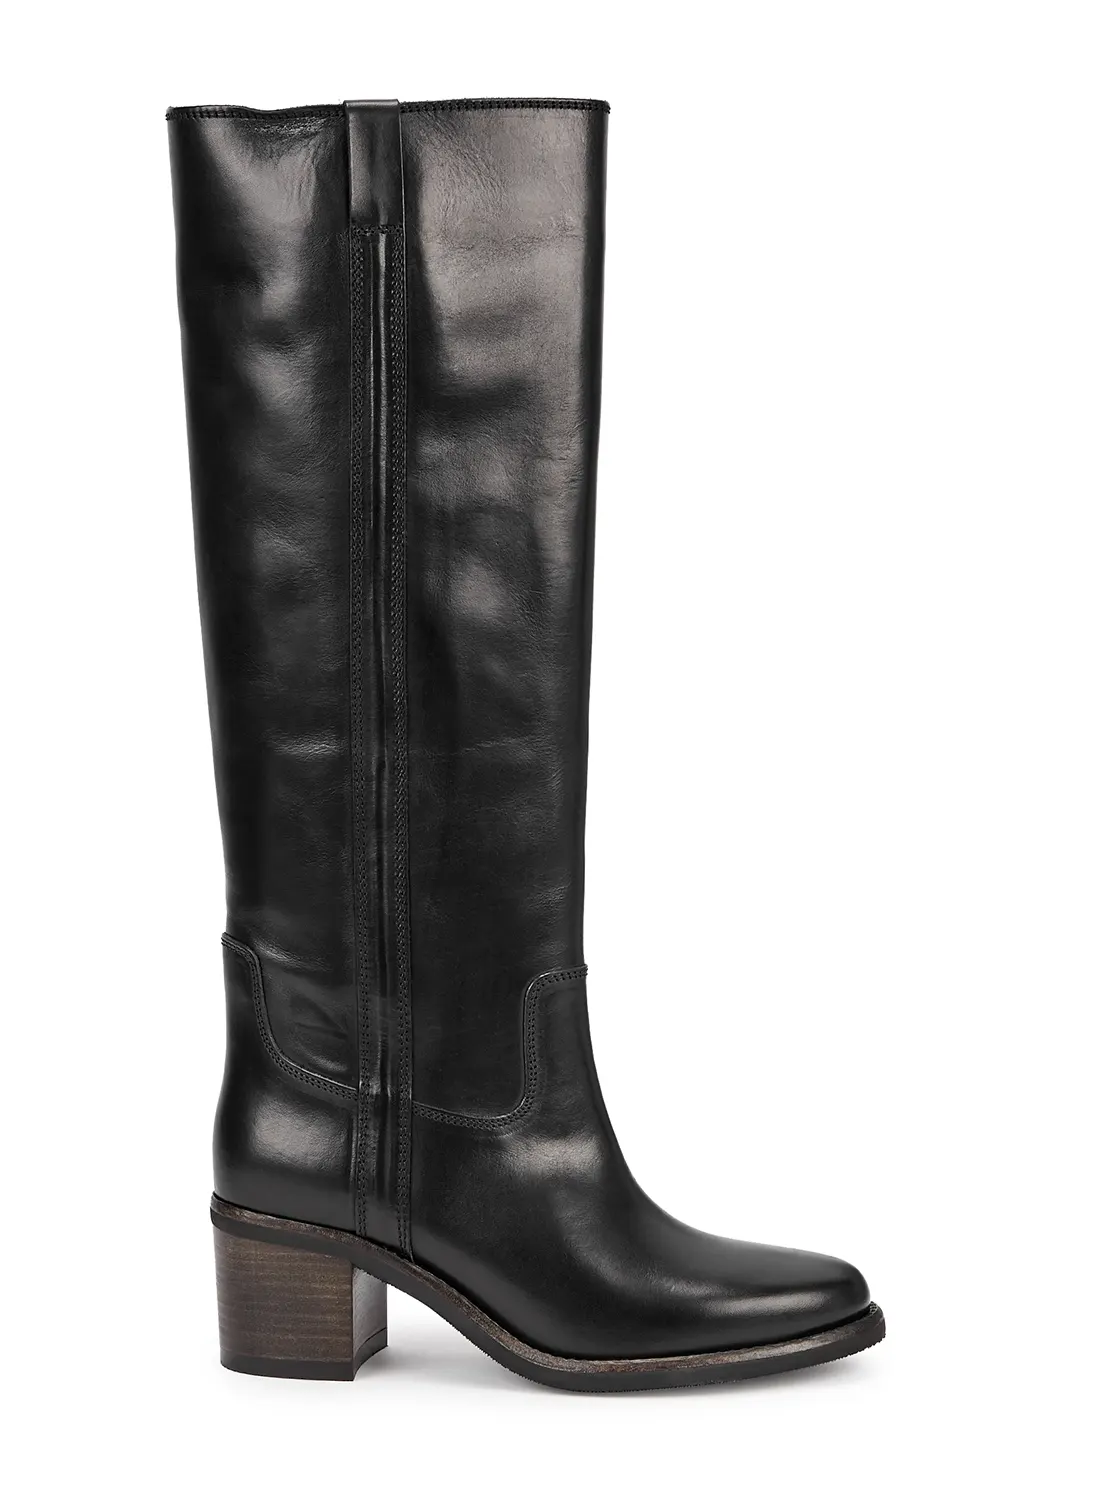 SEENIA high boots, black